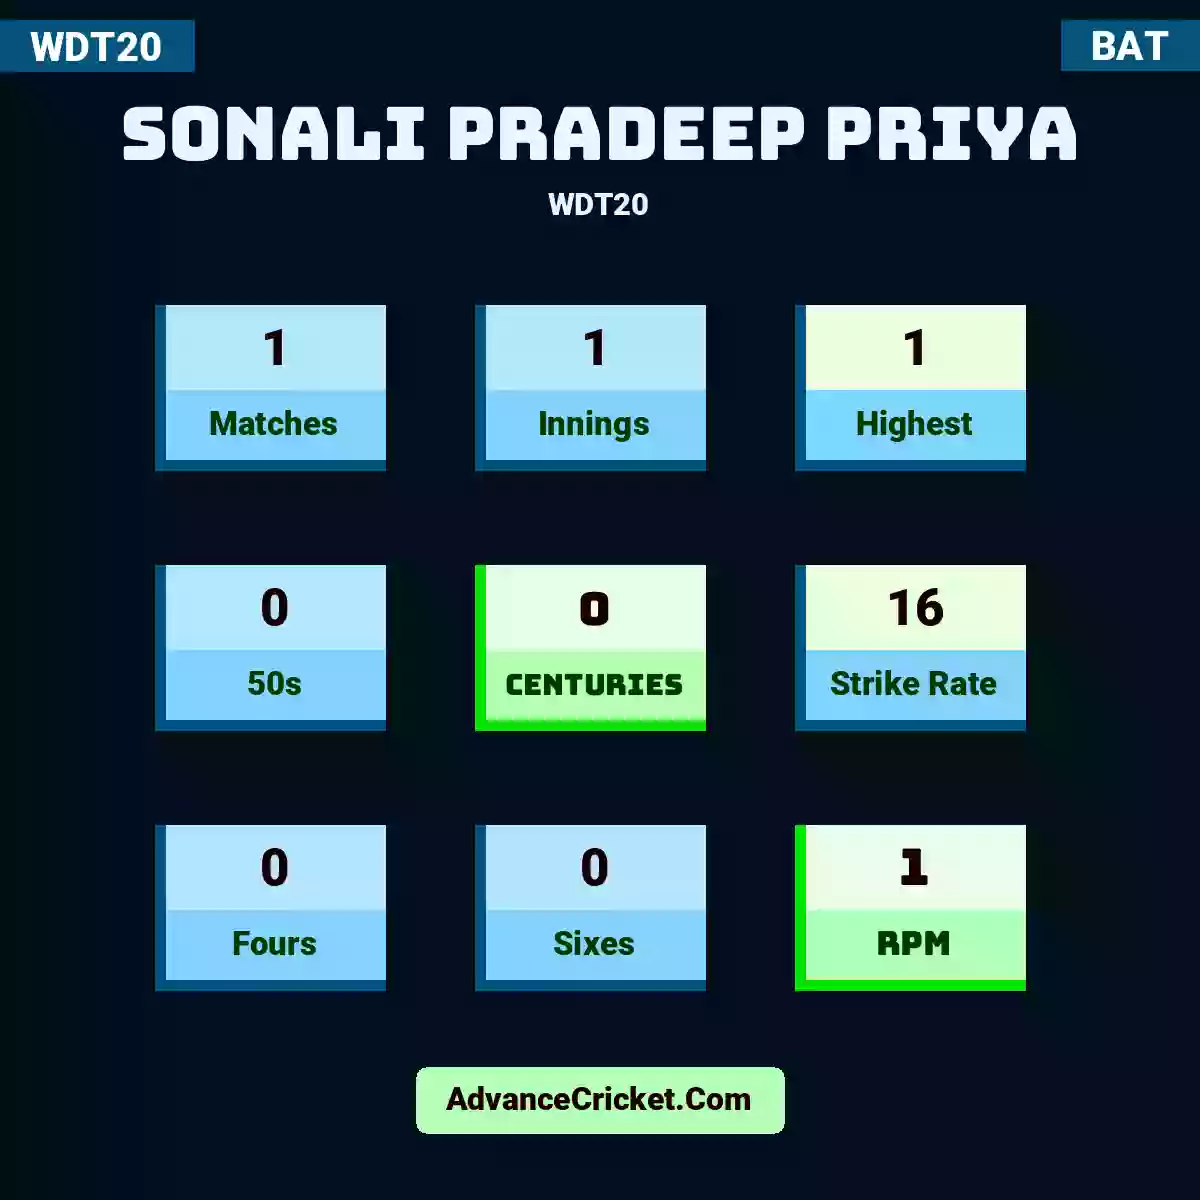 Sonali Pradeep Priya WDT20 , Sonali Pradeep Priya played 1 matches, scored 1 runs as highest, 0 half-centuries, and 0 centuries, with a strike rate of 16. S.Pradeep.Priya hit 0 fours and 0 sixes, with an RPM of 1.